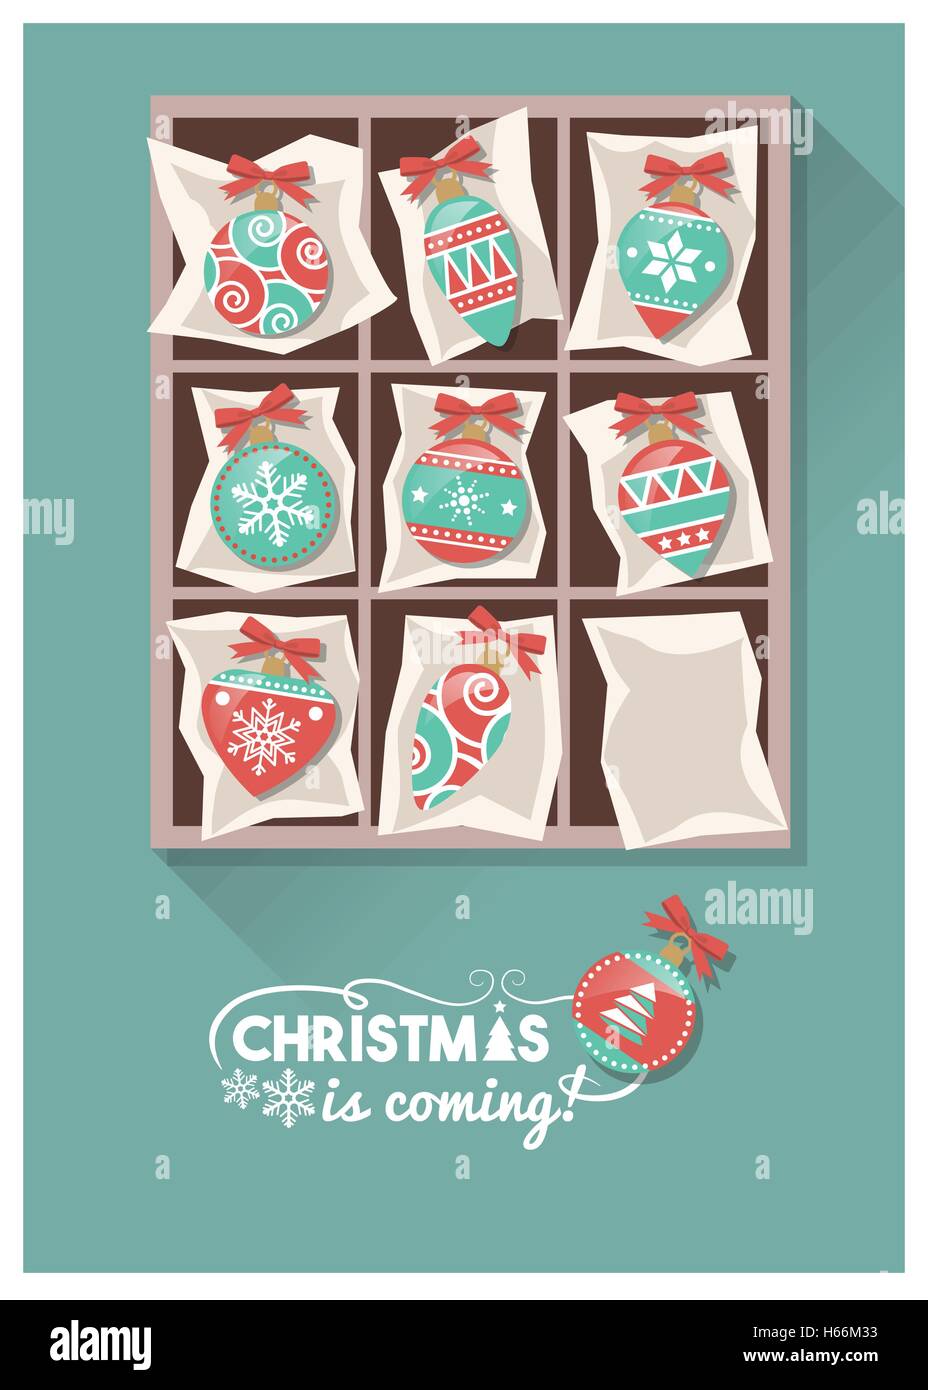 https://c8.alamy.com/comp/H66M33/vintage-christmas-baubles-in-a-box-preparing-for-christmas-concept-H66M33.jpg